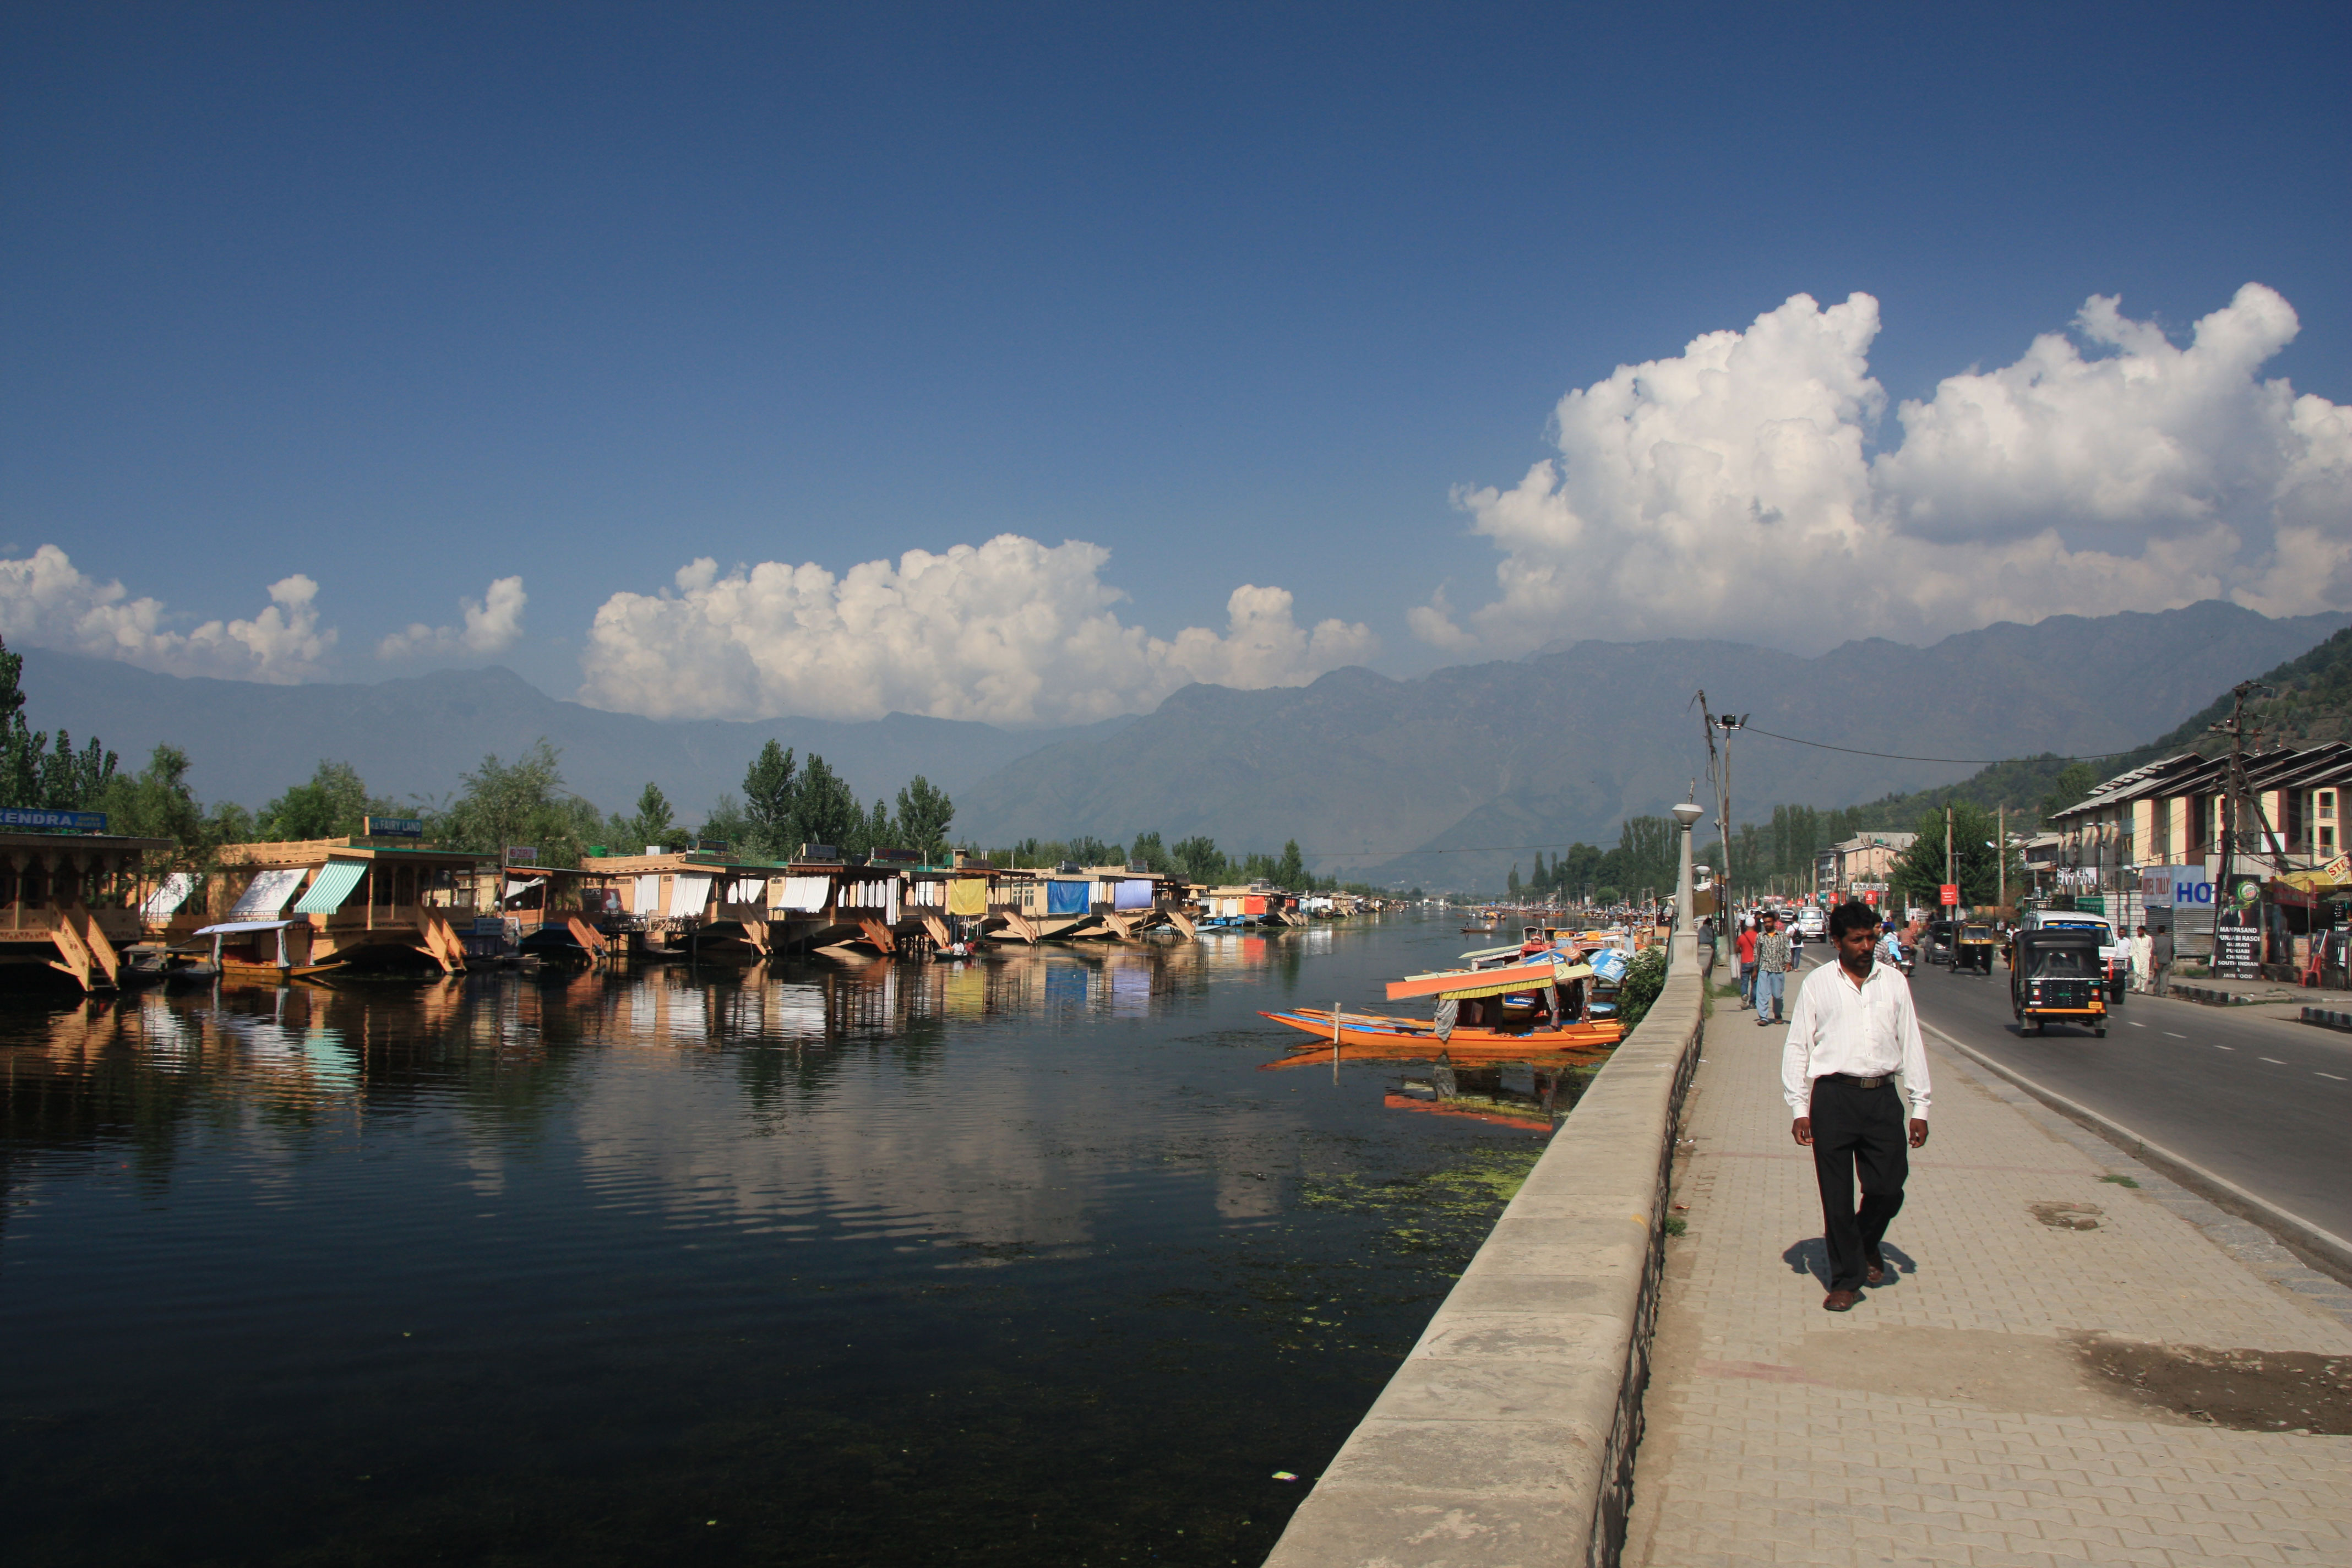 Srinagar’s “Broadway” boardwalk along Dal Lake.